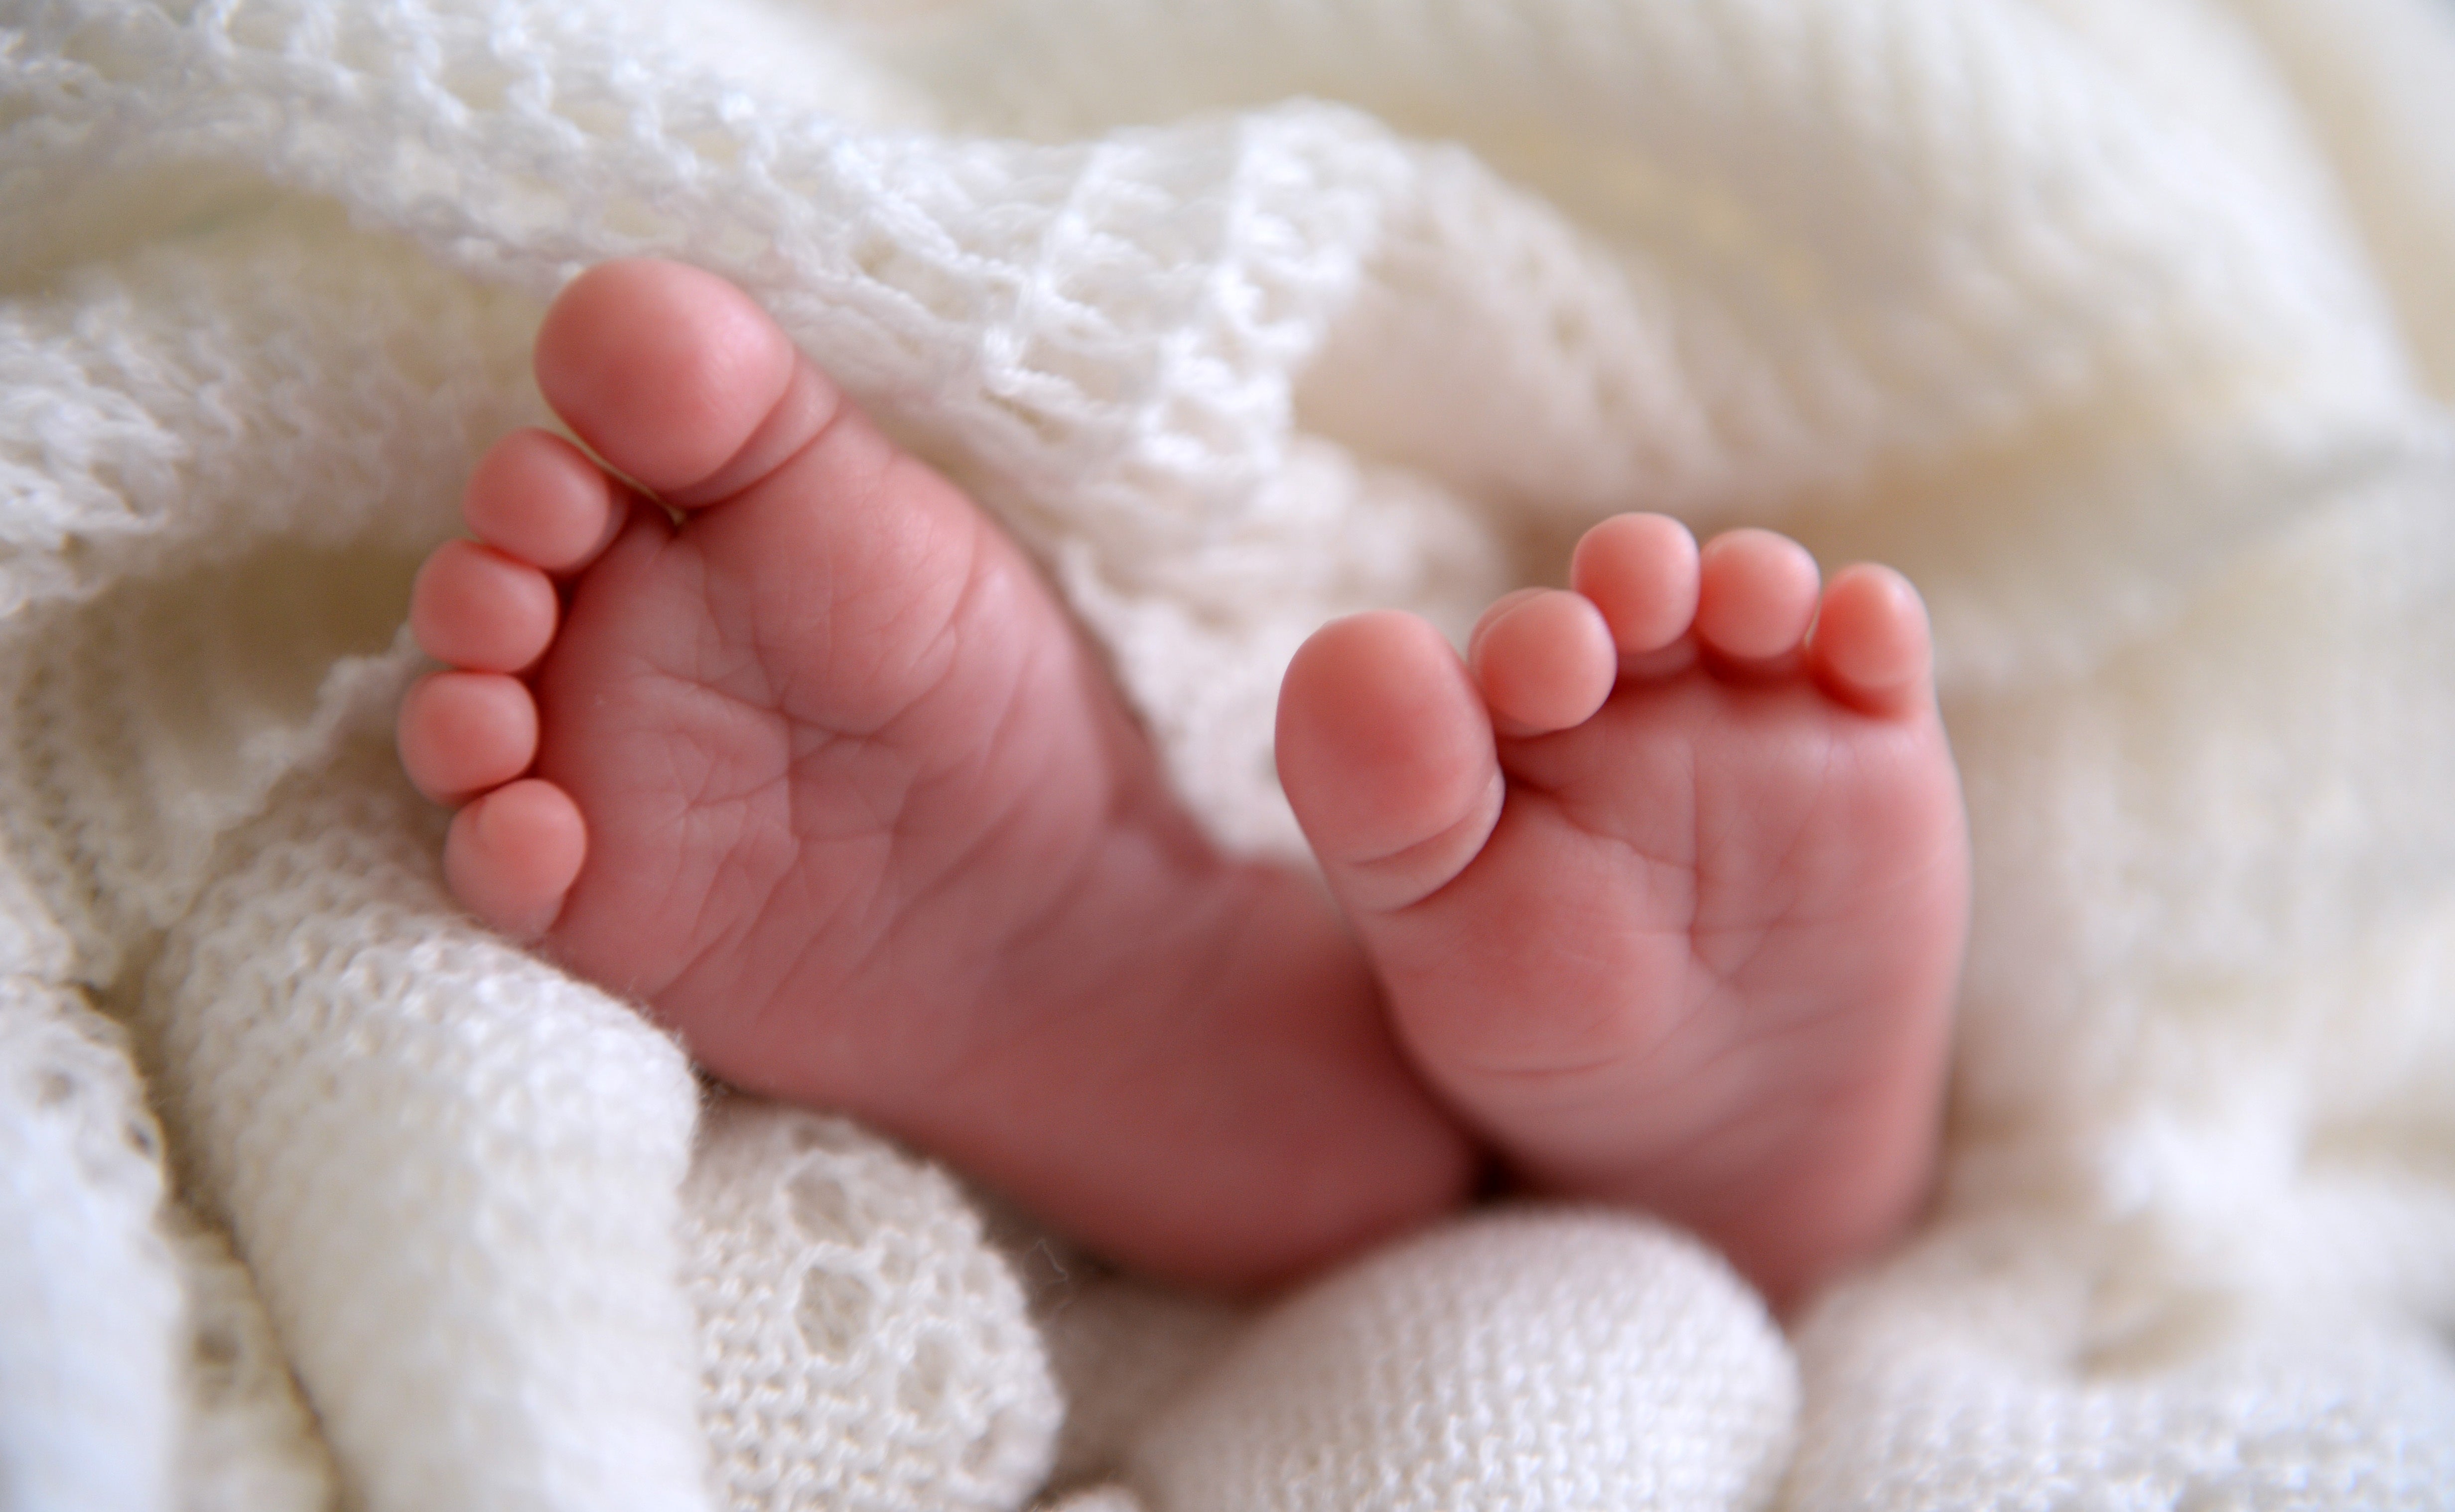 A new-born baby’s feet (Andrew Matthews/PA)